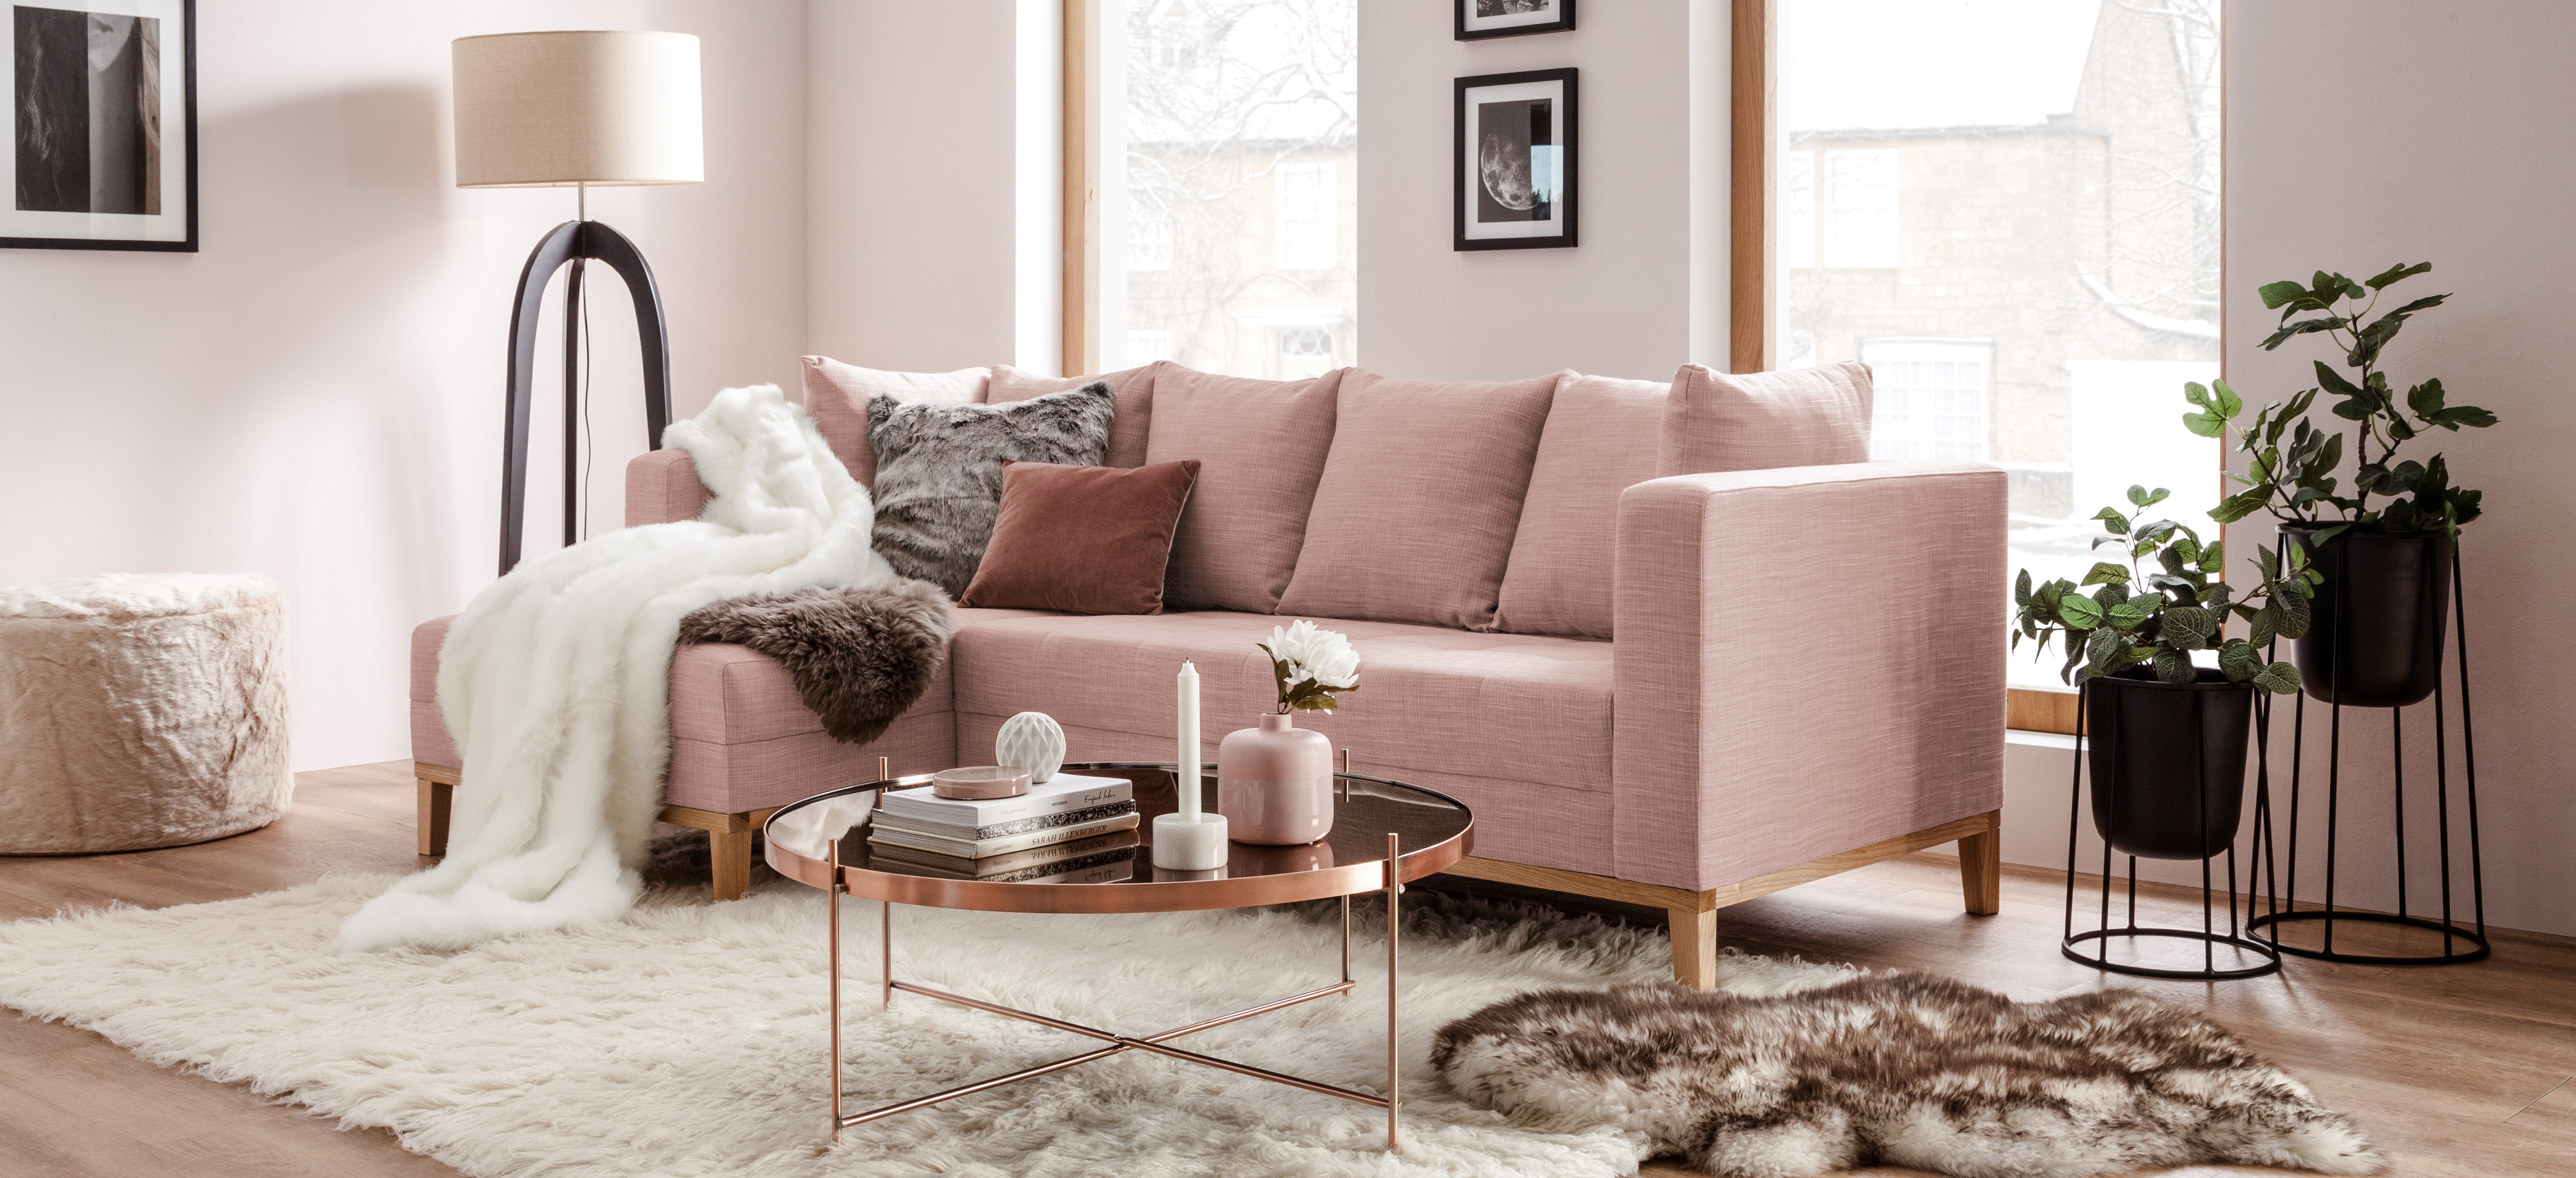 home24 Scandinavian Style Furniture Mindsparkle Mag